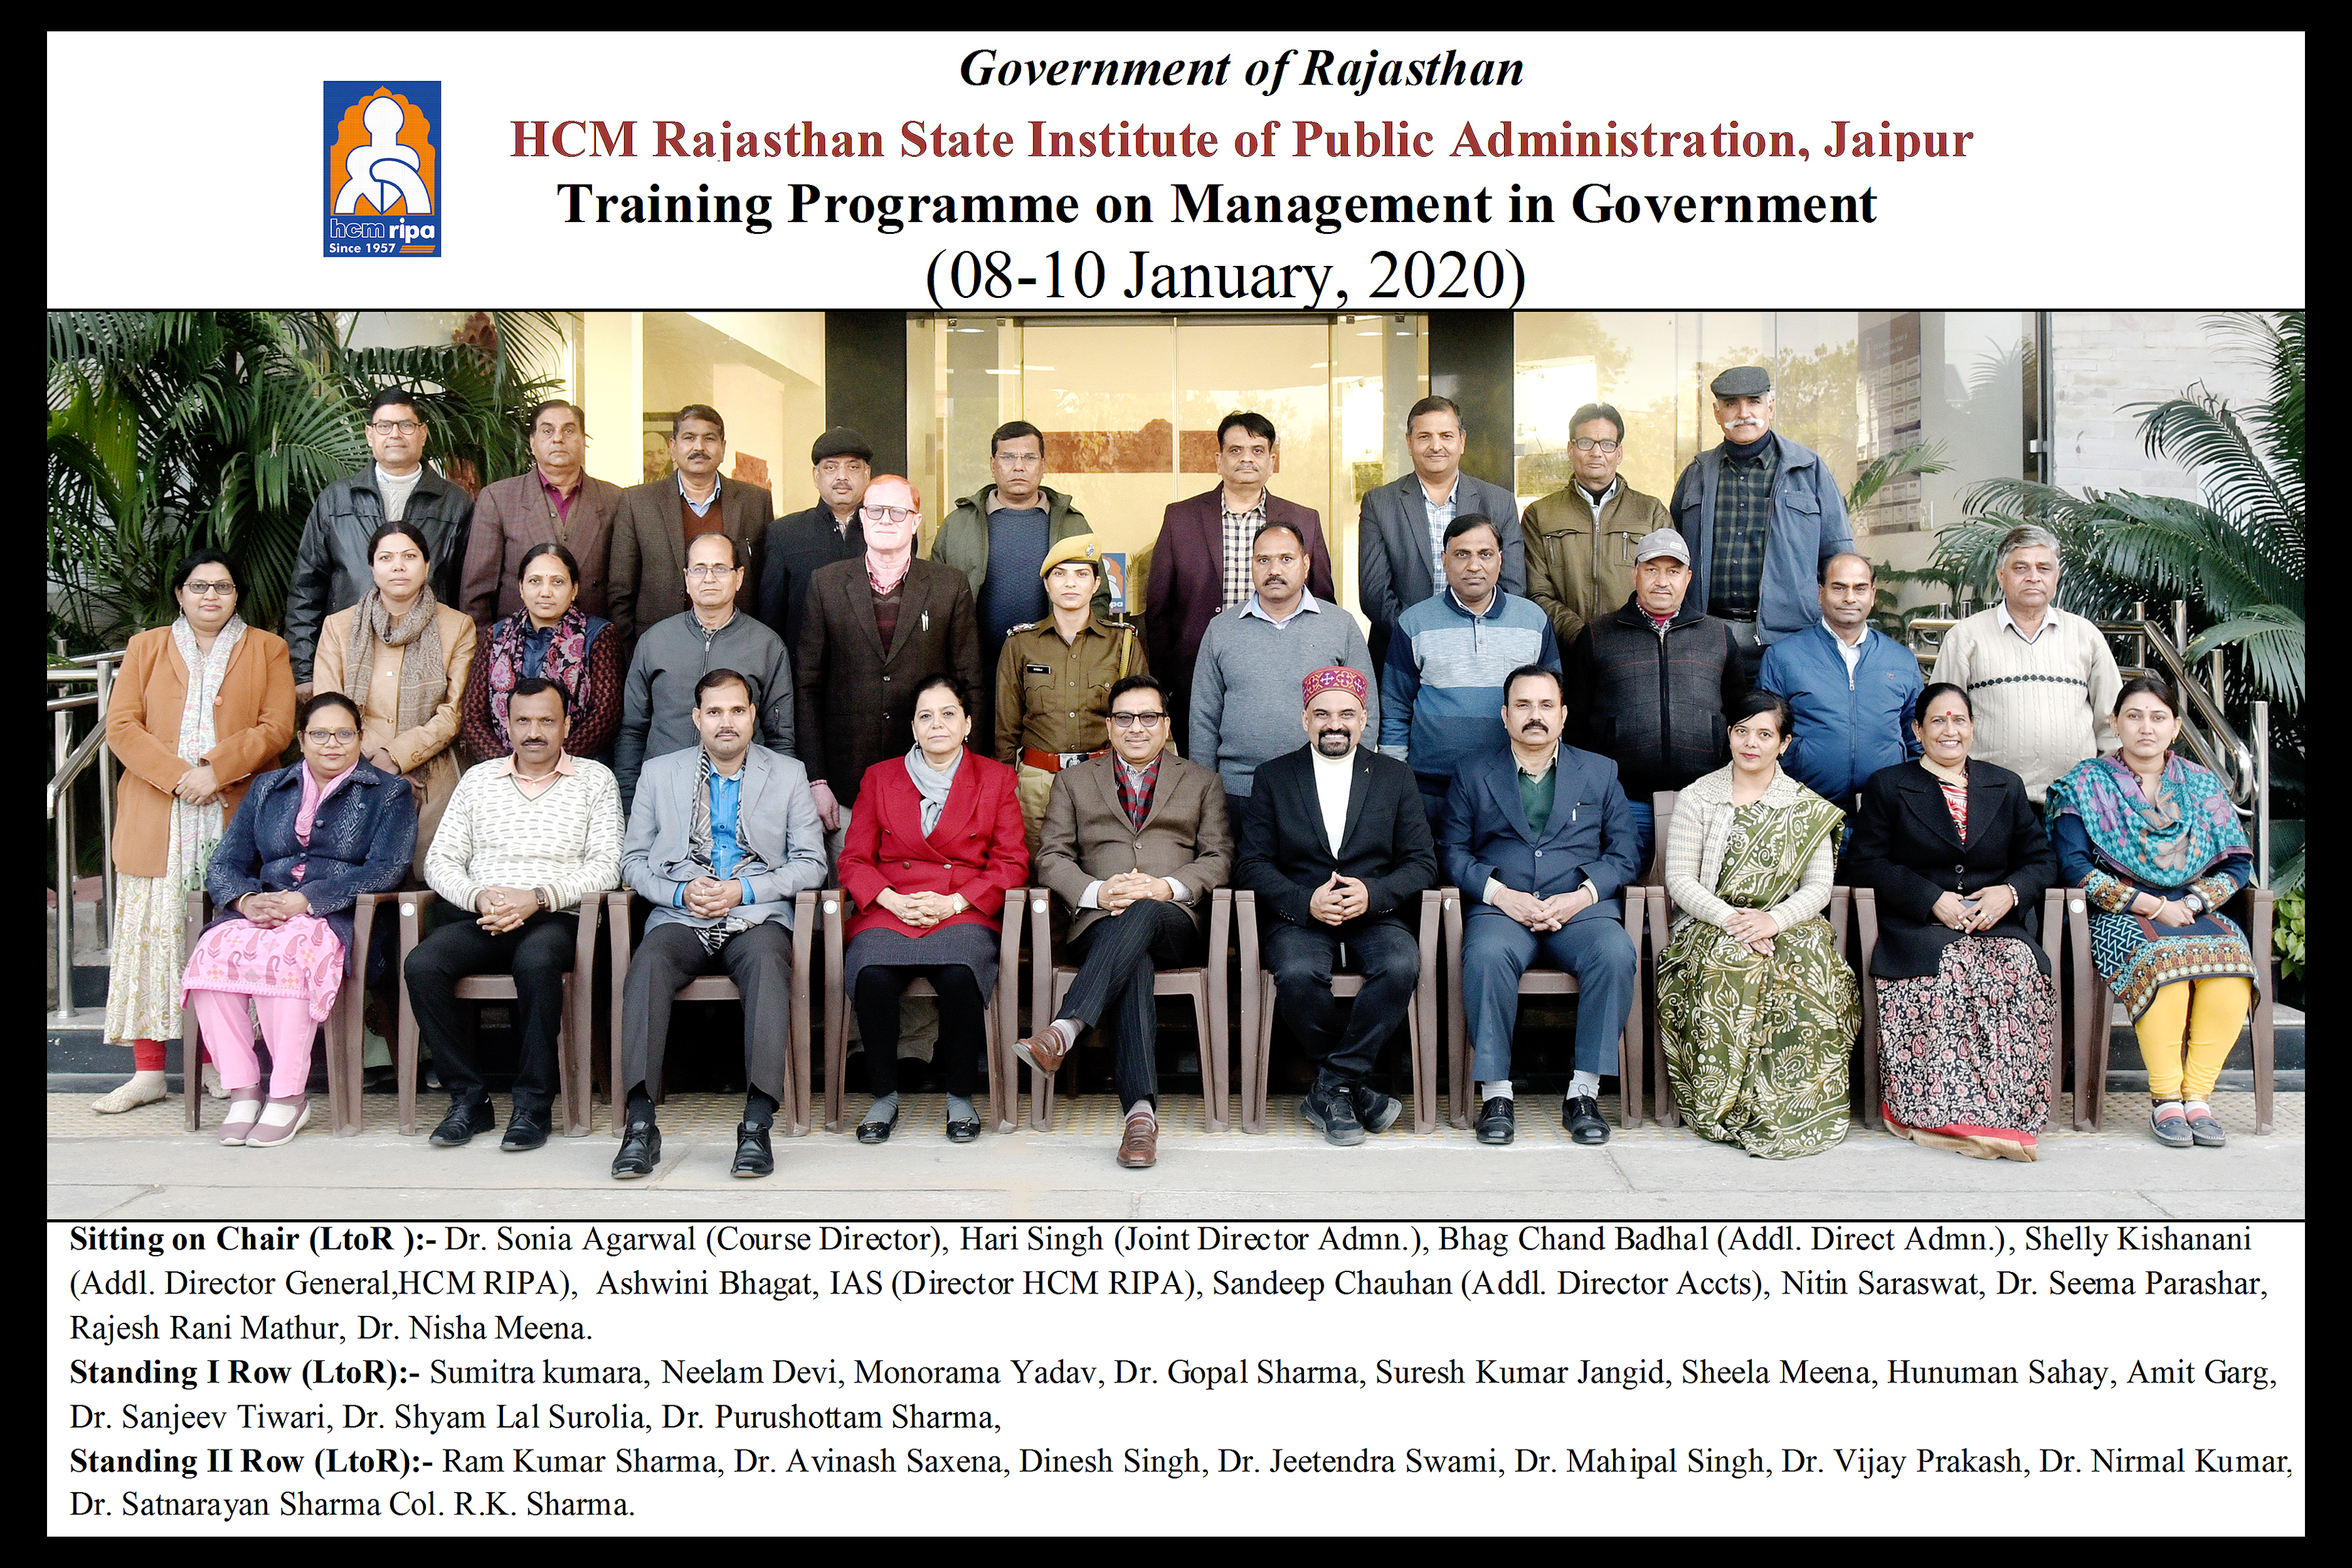 Management in Governance Jan 2020